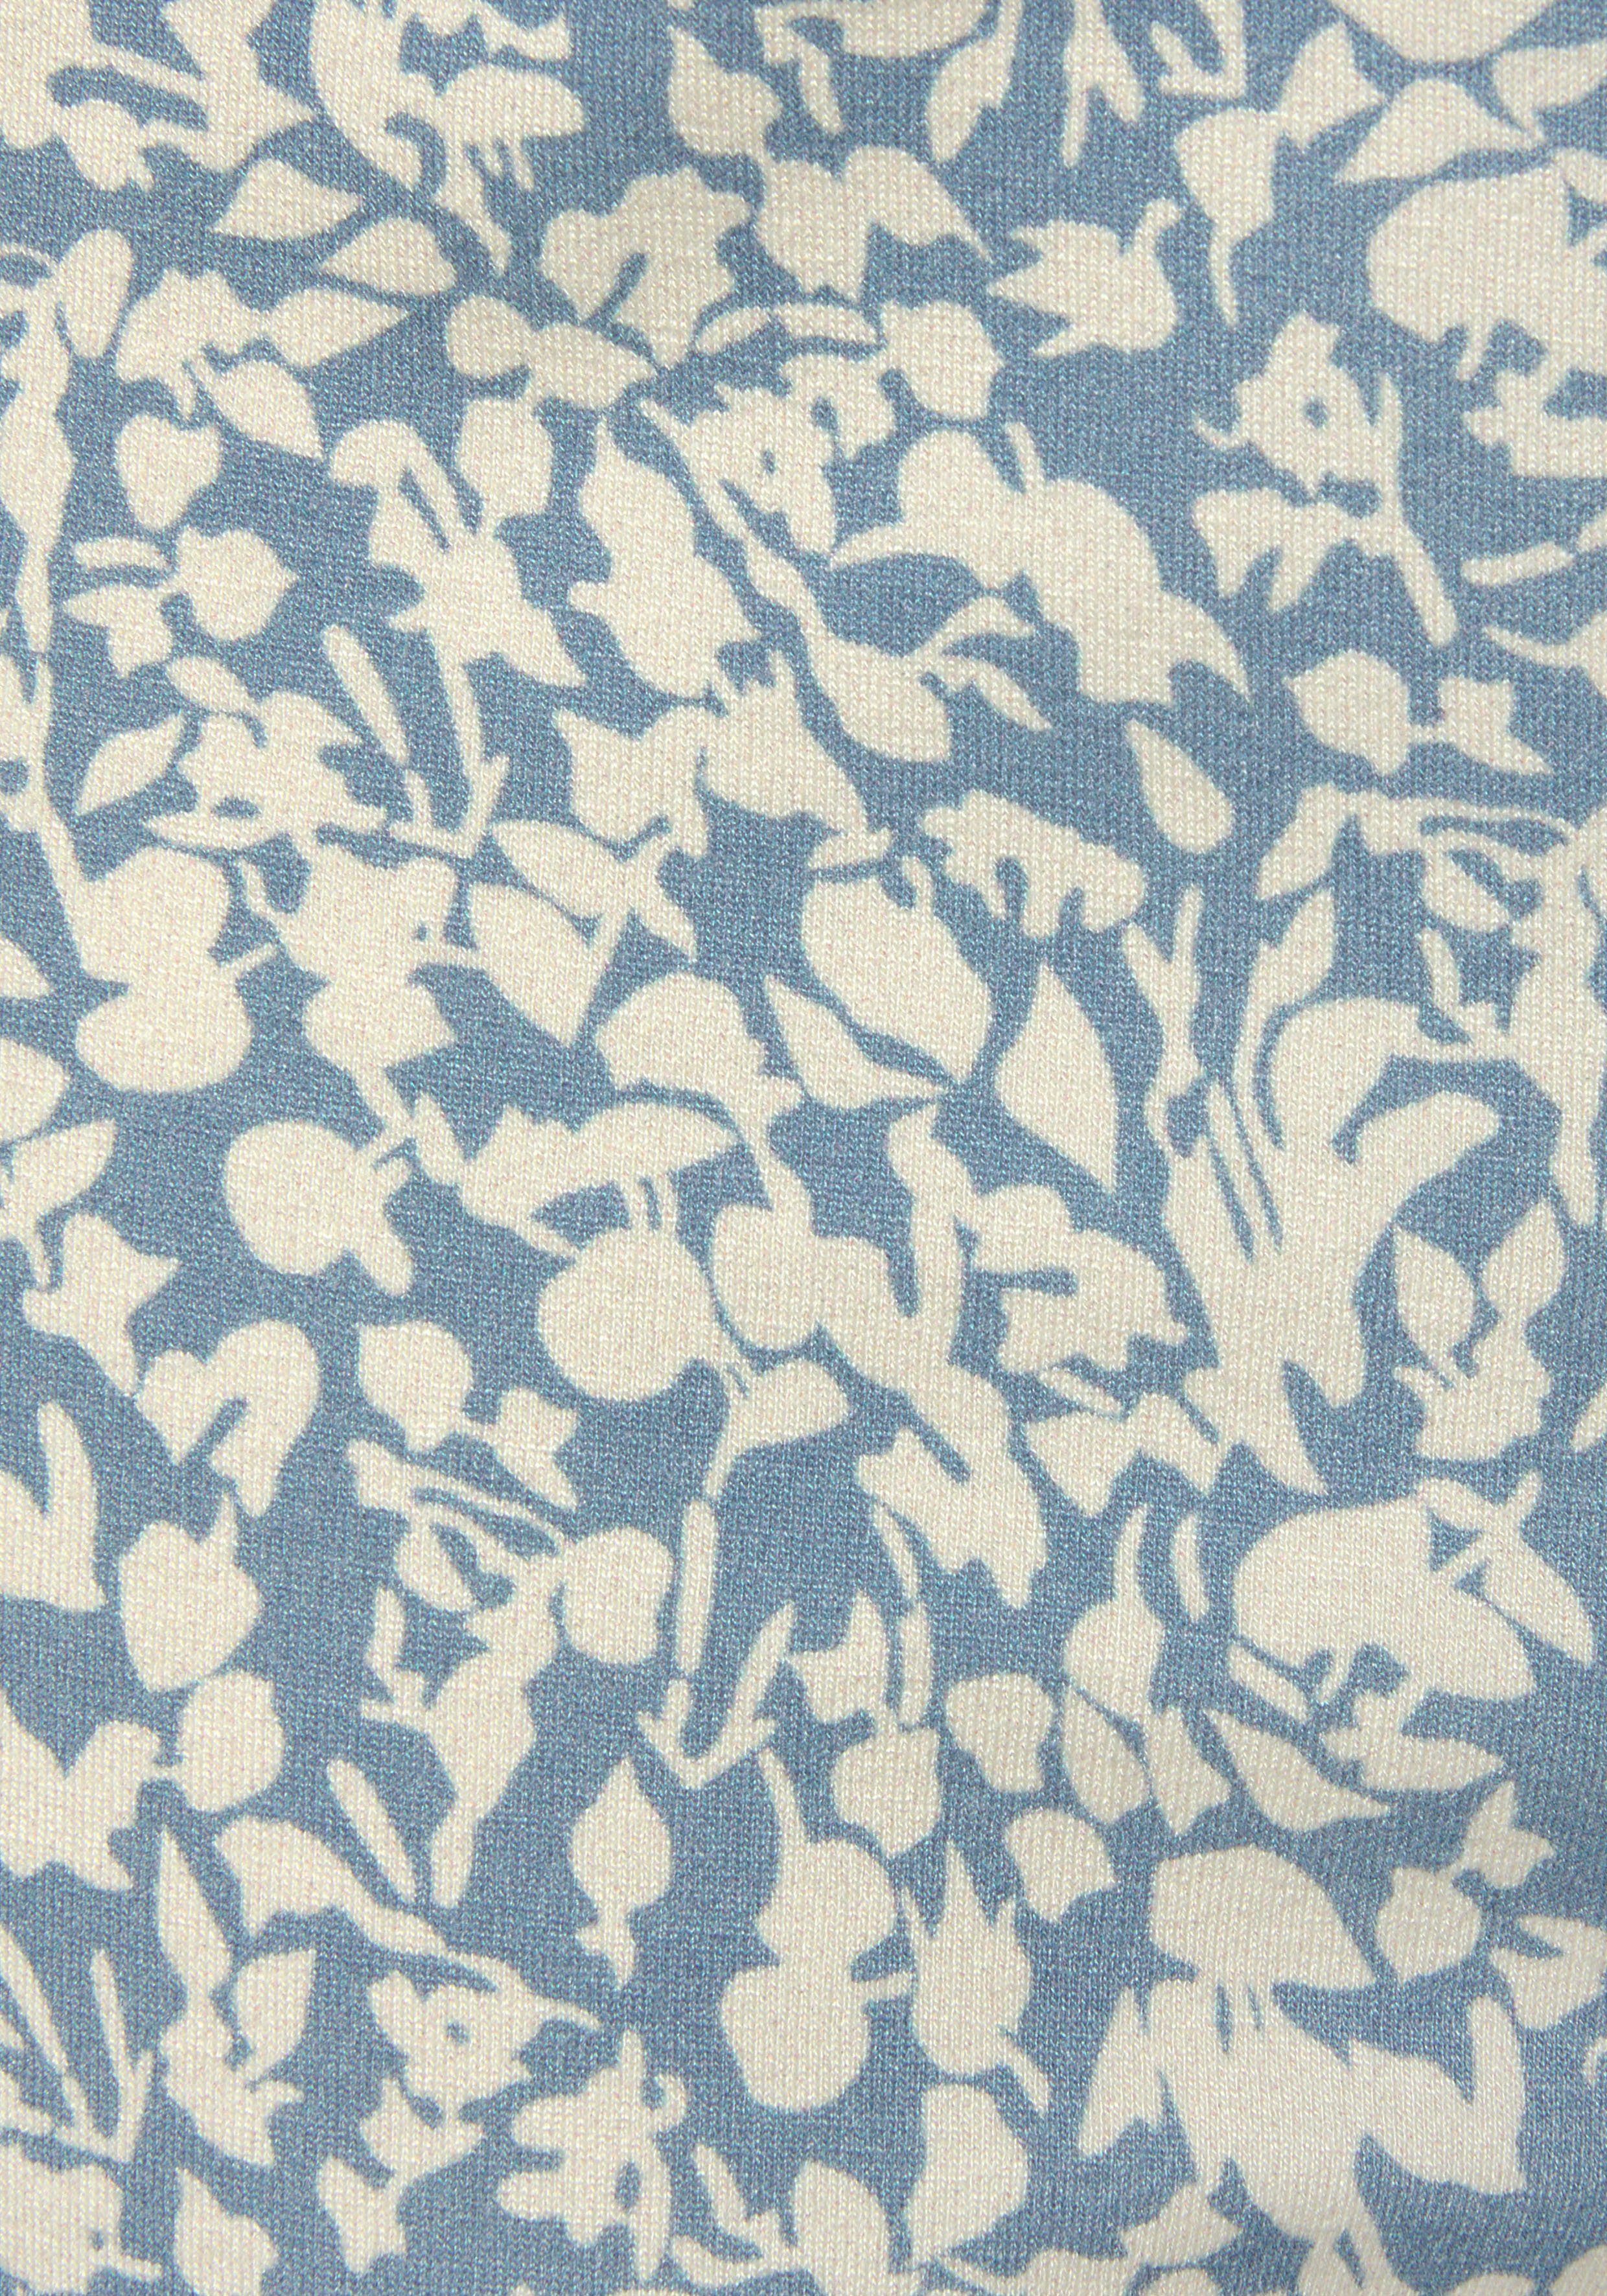 Vivance Hosenrock mit Blumendruck blau-creme-bedruckt